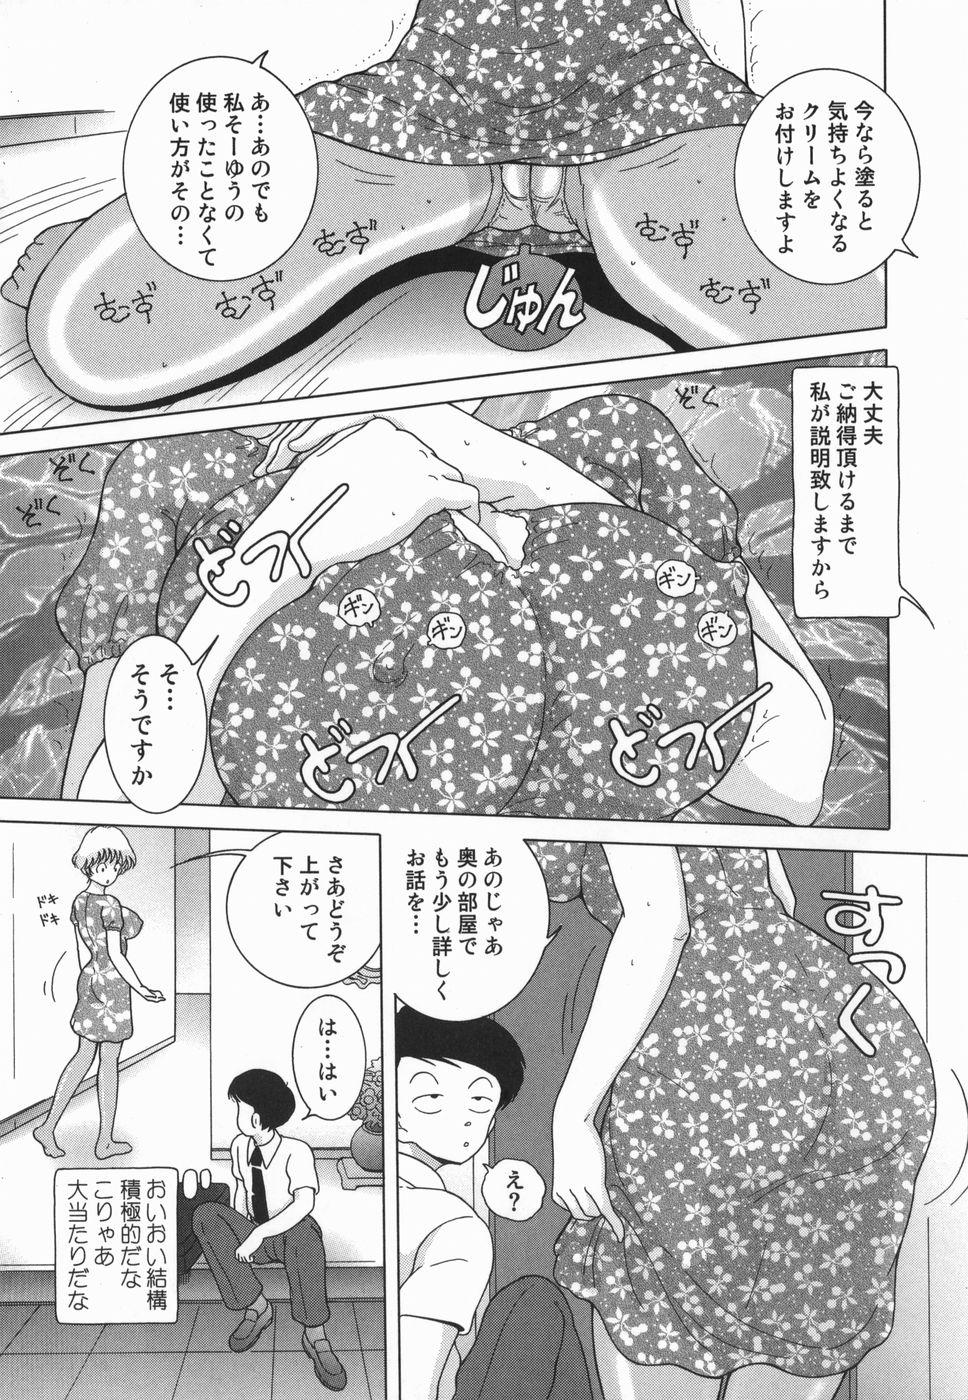 Jogakusei Maetsu no Kyoukasho - The Schoolgirl With Shameful Textbook. 156